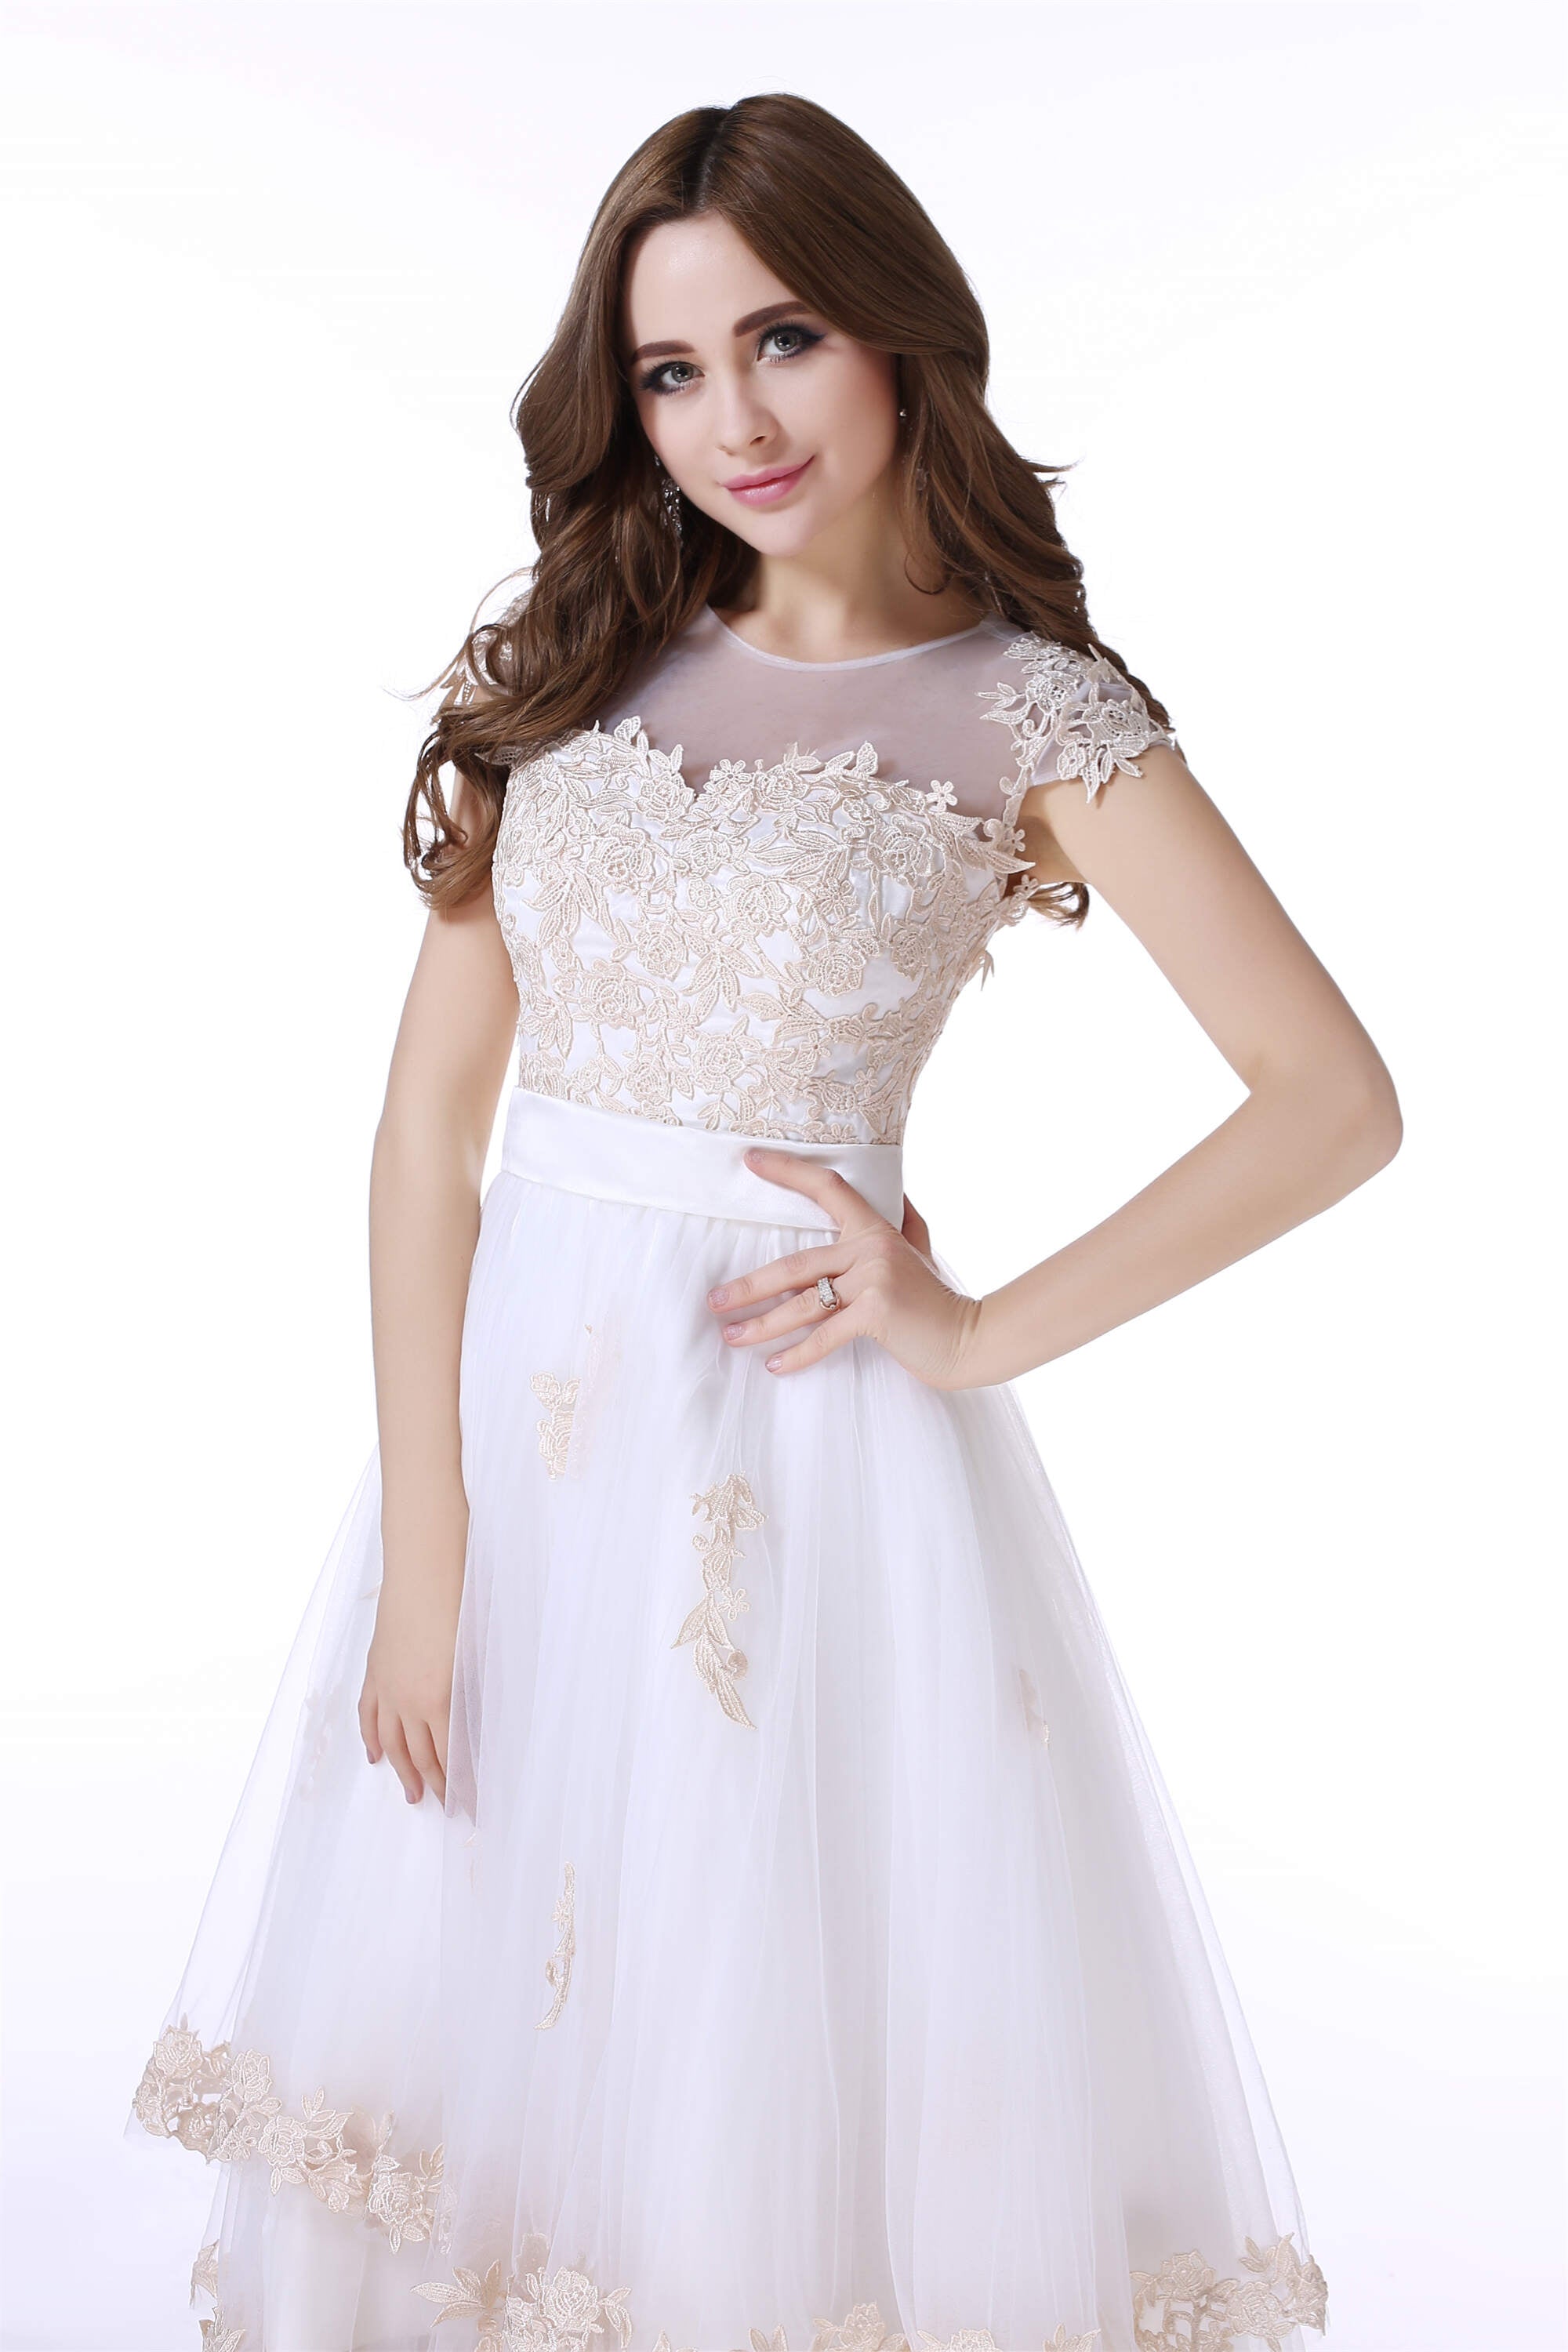 White Tulle Champagne Lace Tea Length Sleeveless Corset Wedding Dresses outfit, Wedding Dress Customization